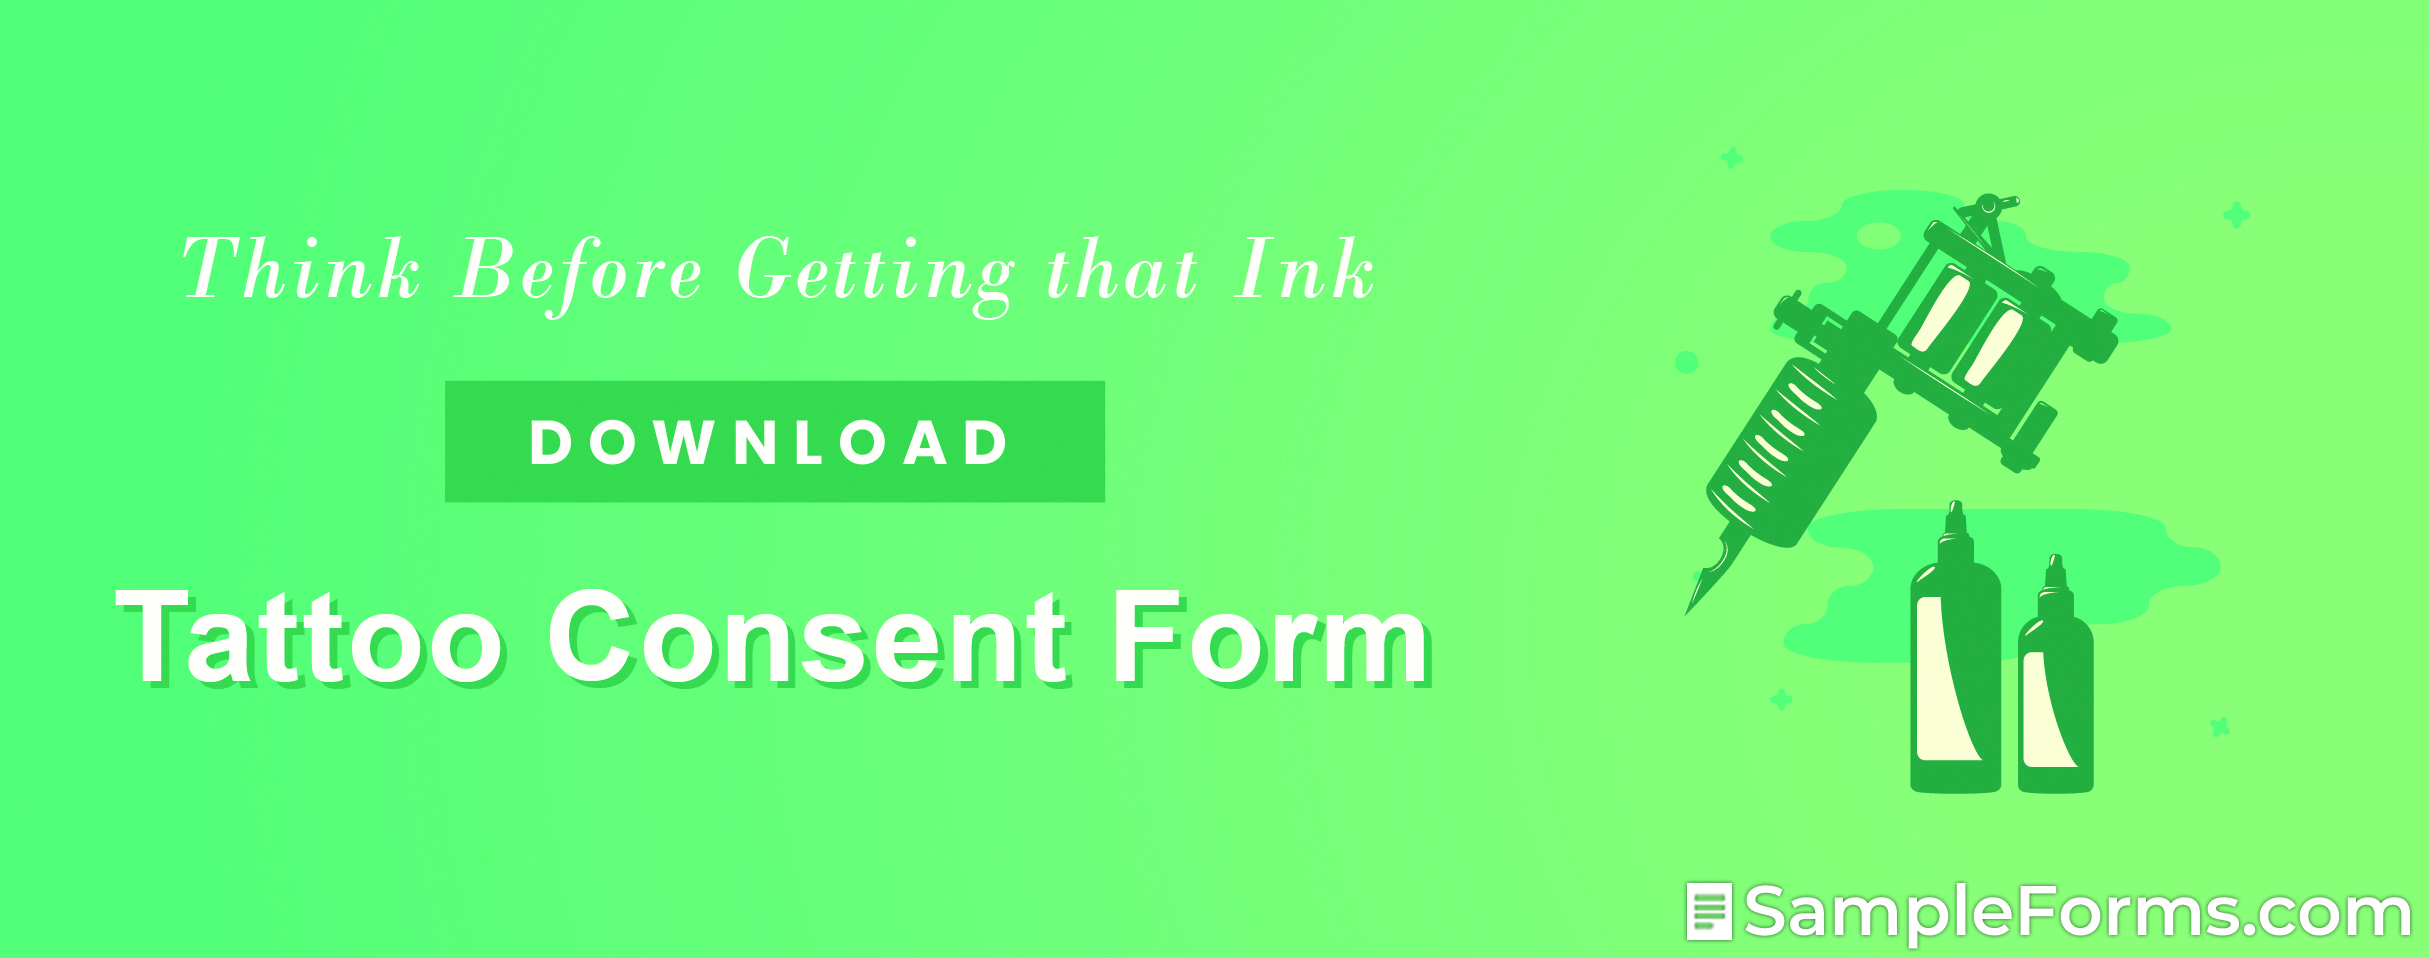 Tattoo Consent Form2